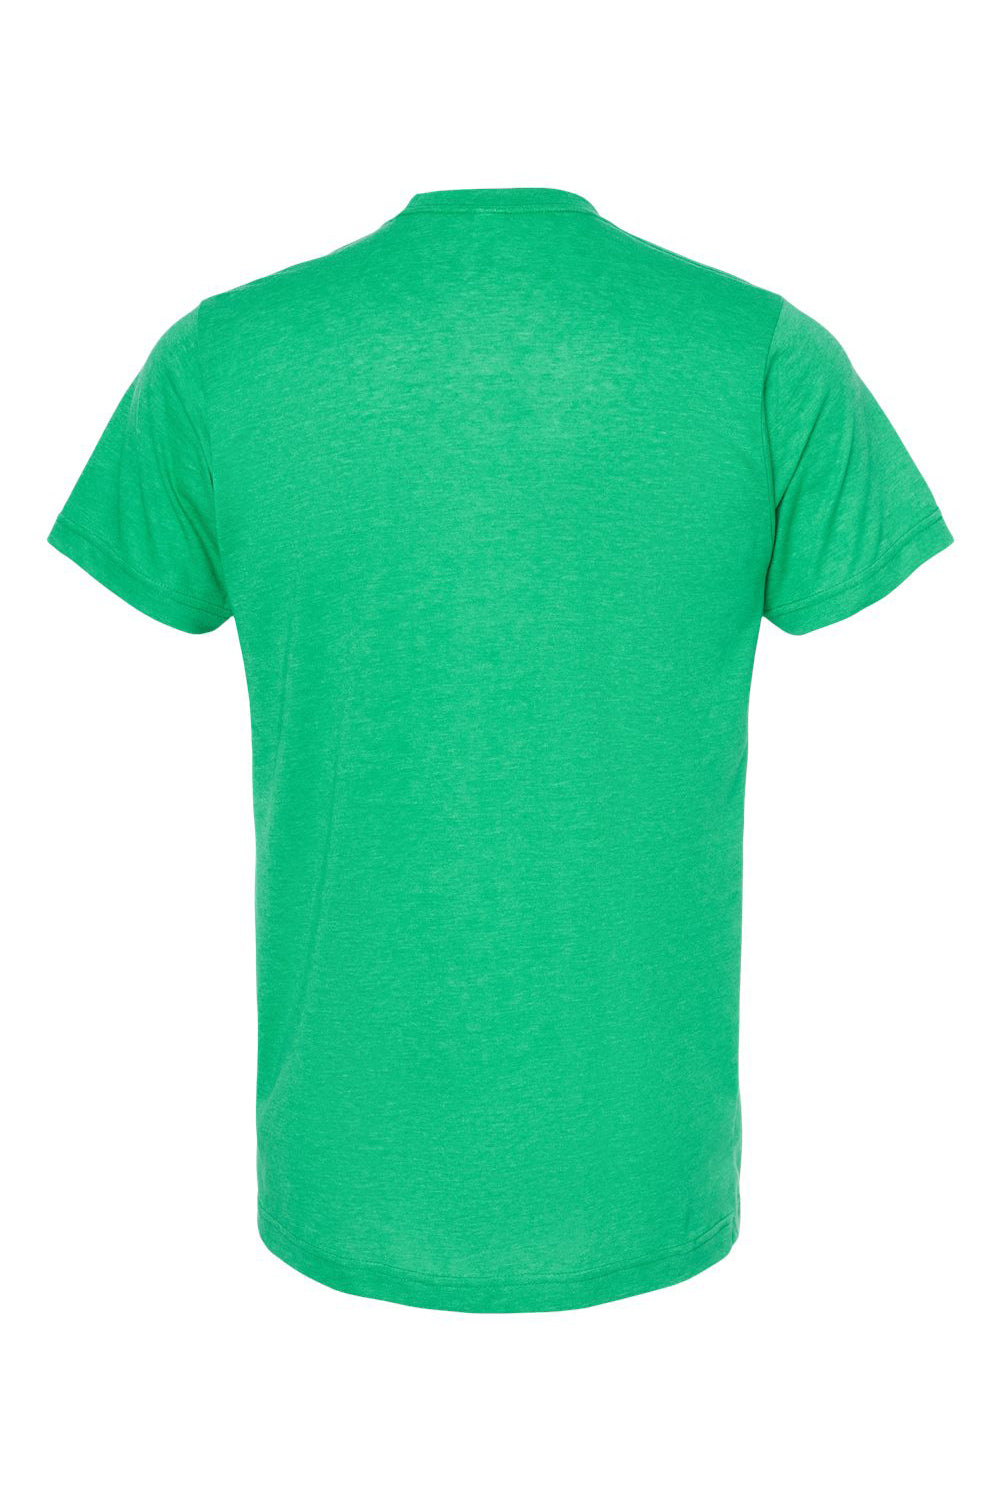 Tultex 241 Mens Poly-Rich Short Sleeve Crewneck T-Shirt Heather Kelly Green Flat Back